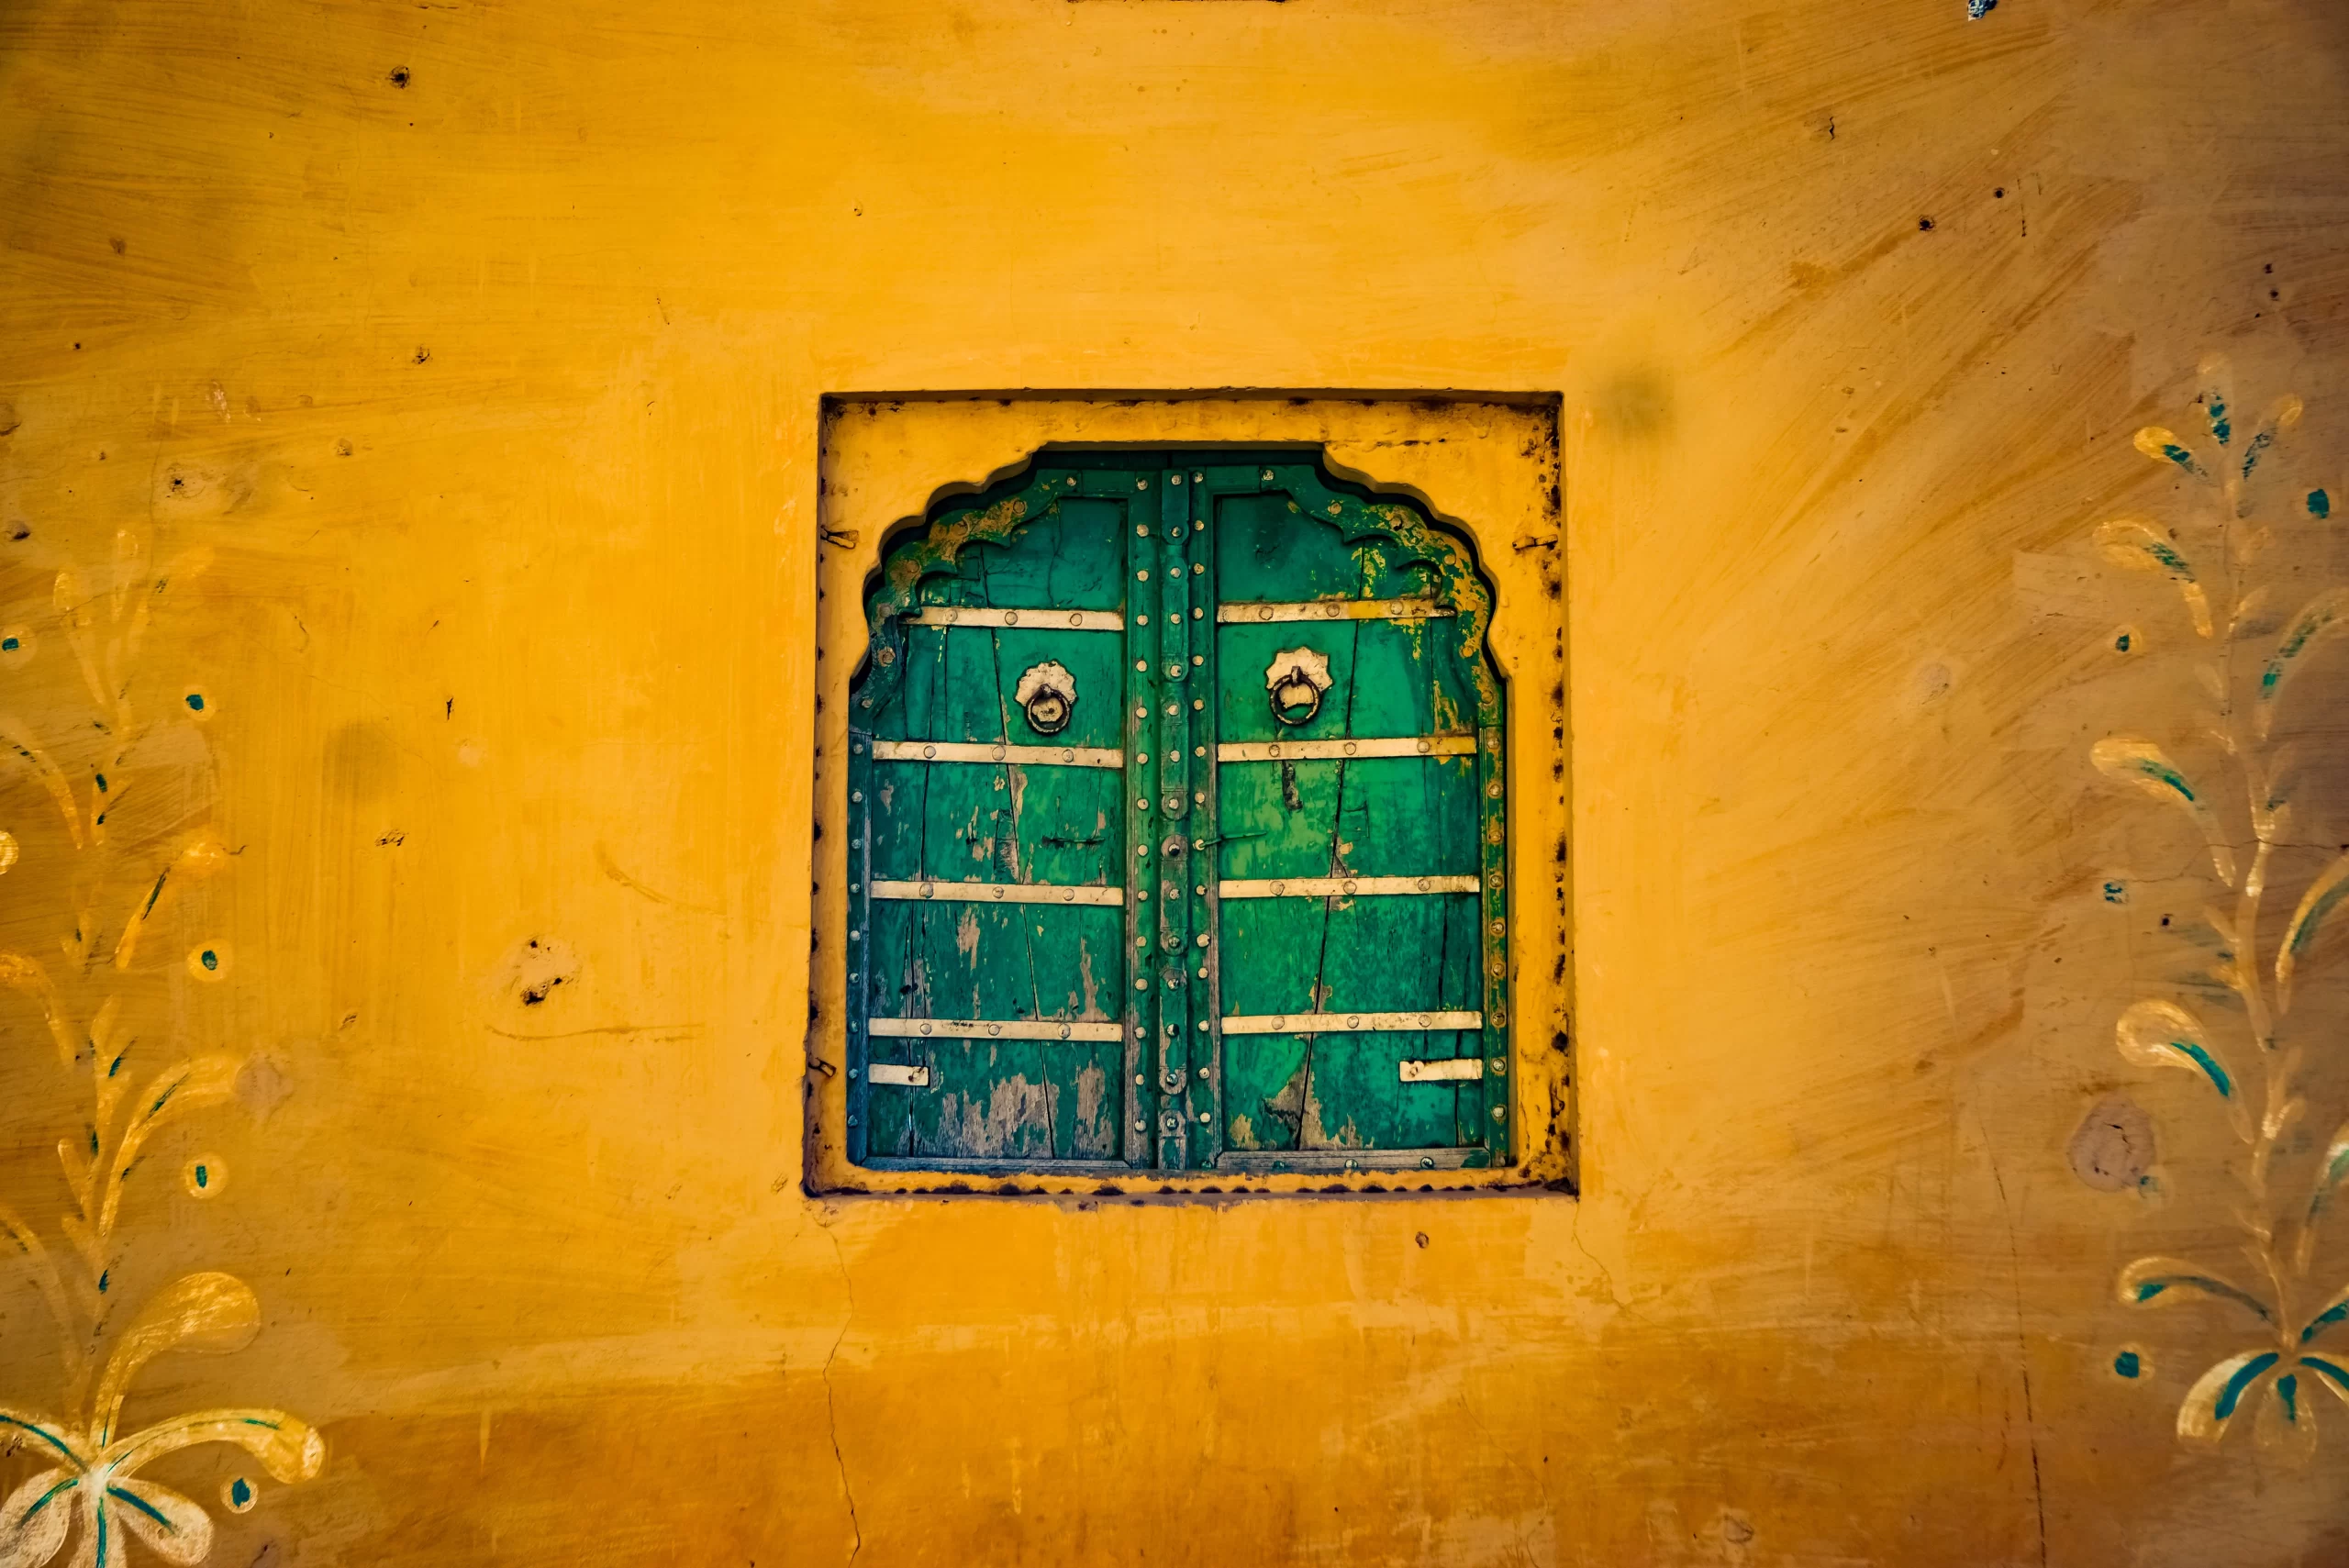 abhinav-srivastava-Orange Adobe edifice with recessed window shutters closed India-unsplas